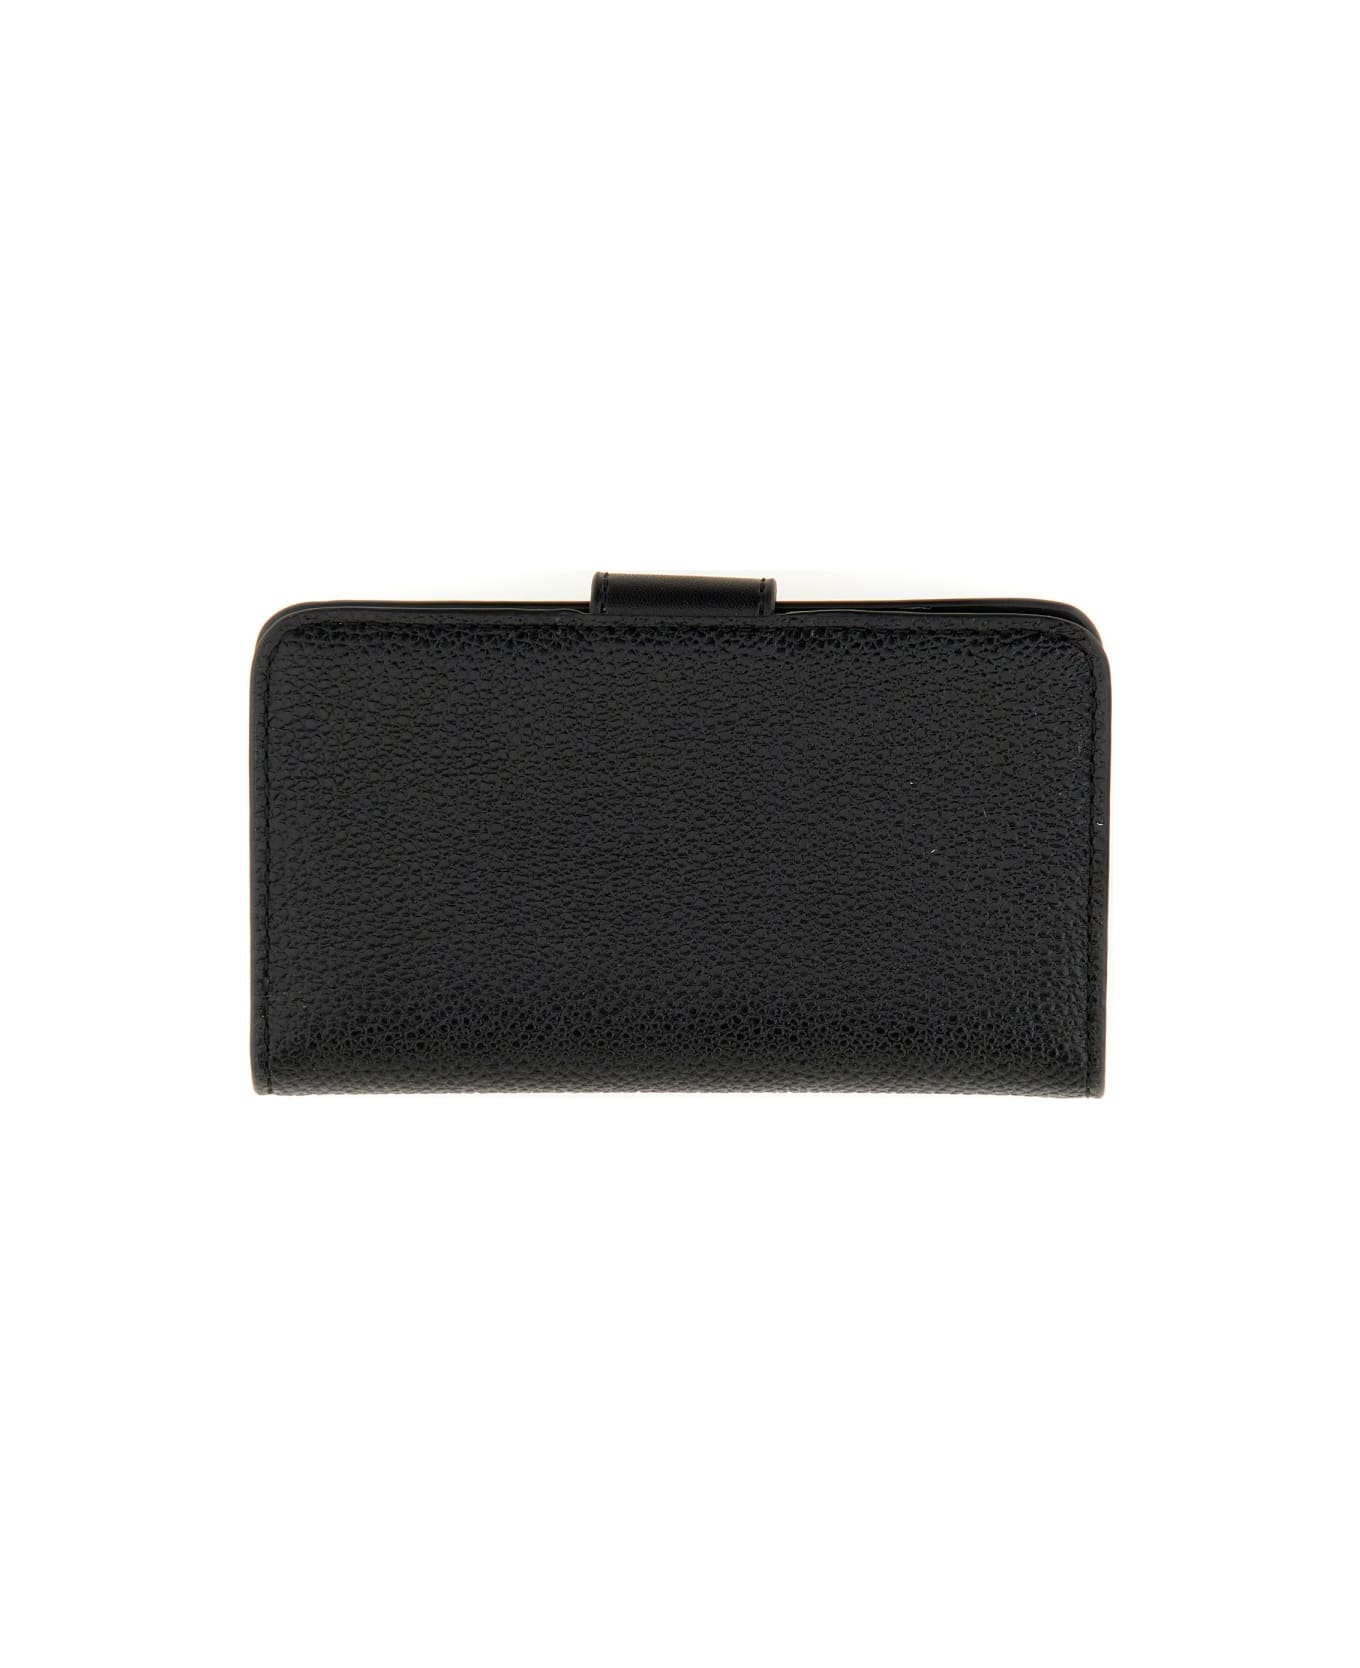 Michael Kors Wallet With Logo - Black 財布